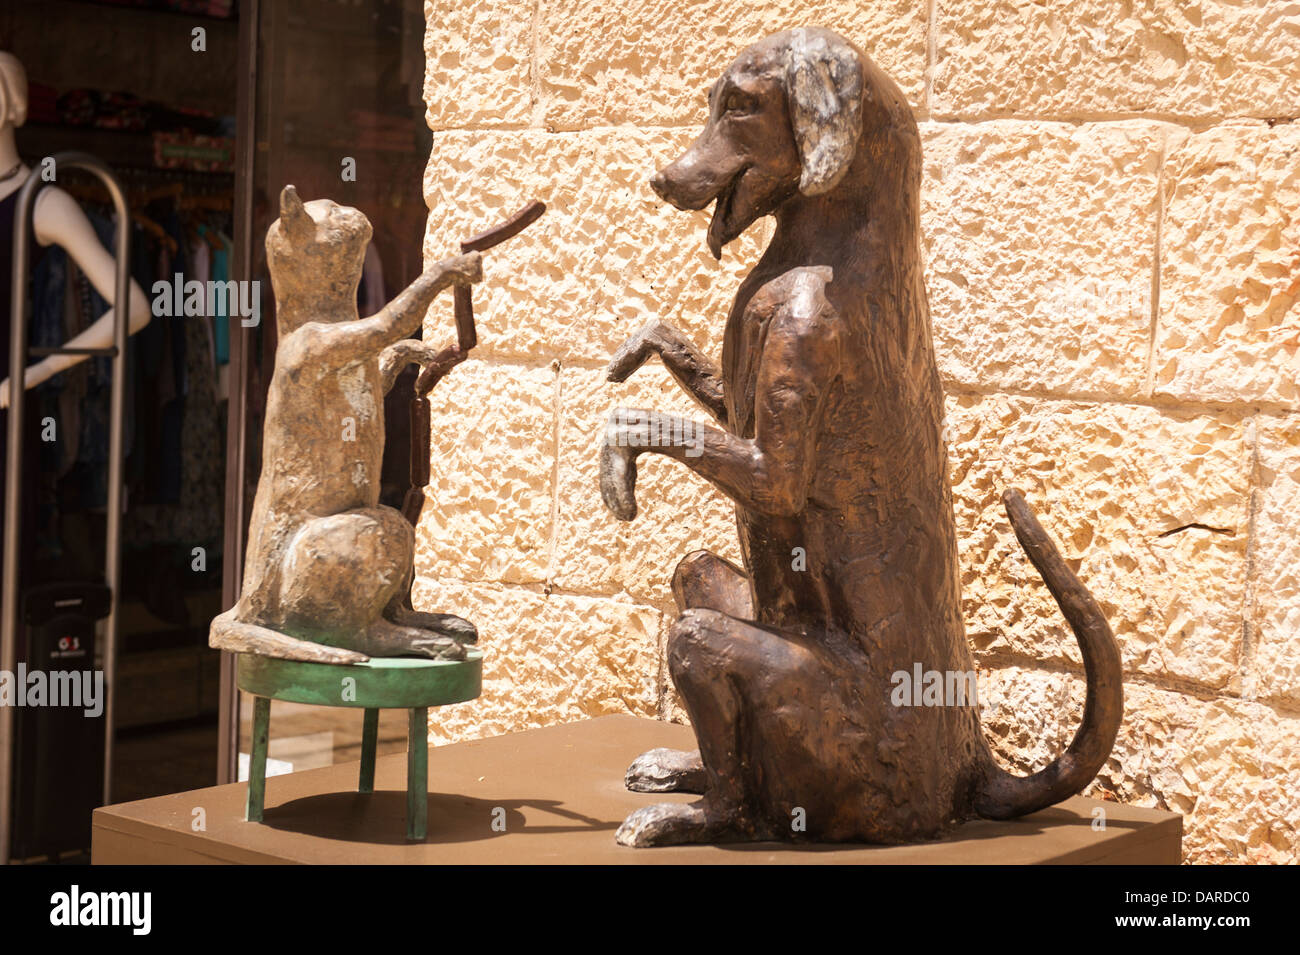 Israel Jerusalem Alrov Mamilla Avenue Mall modern contemporary art exhibition Humor & Satire statue sculpture by Dr Kizelshtain Martin cat feeding dog Stock Photo